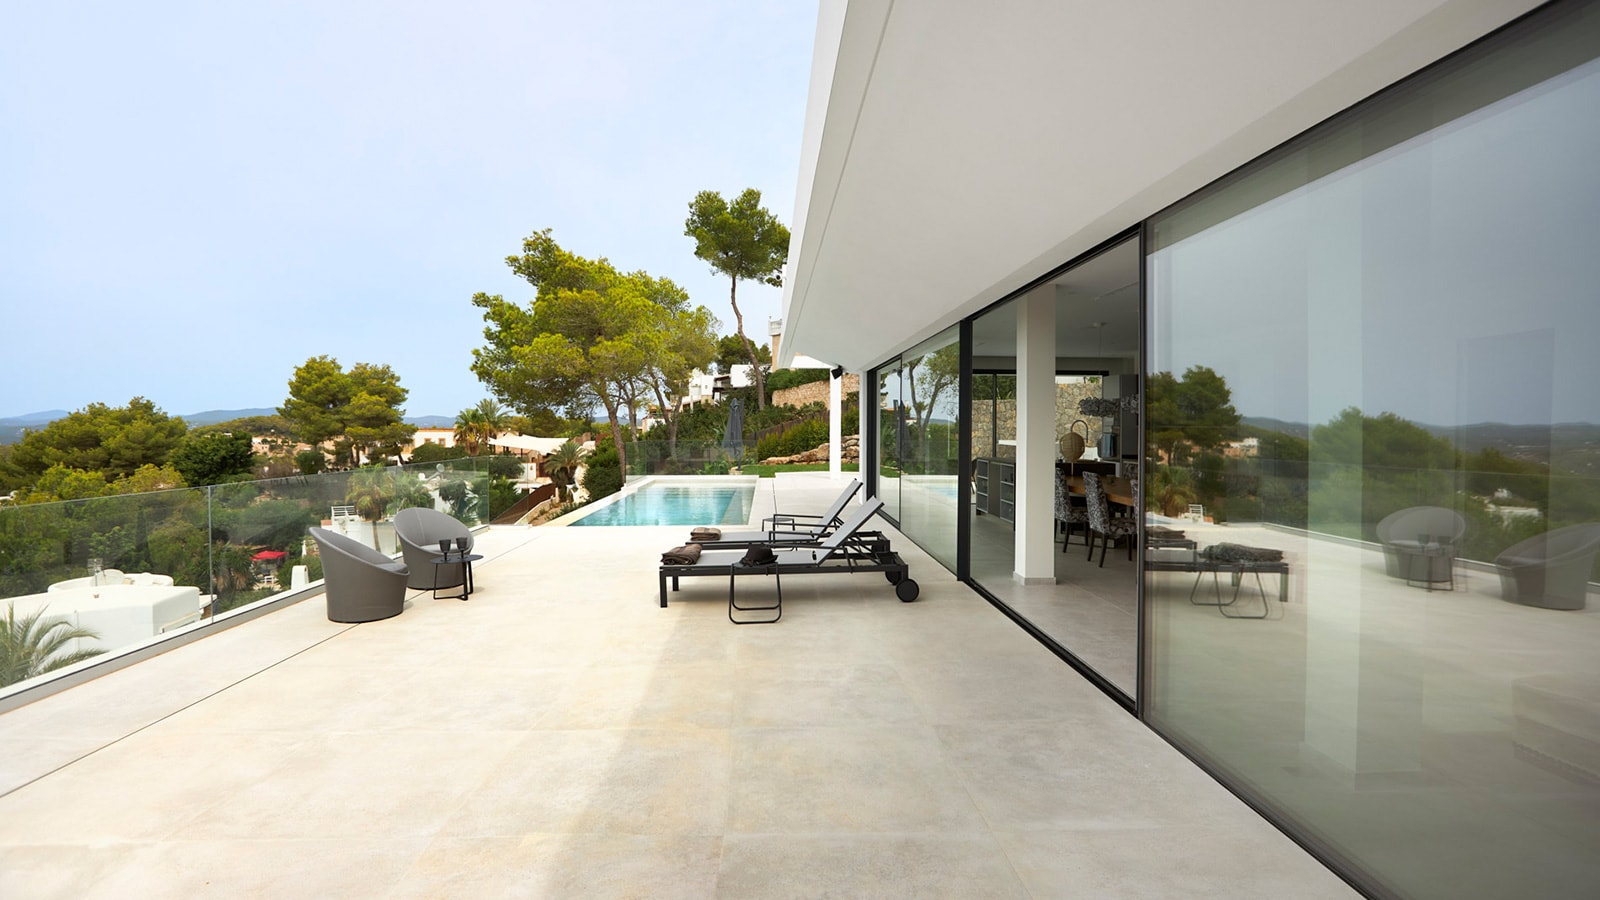 Villa Secreta: a fusion of light, air and vegetation in Ibiza